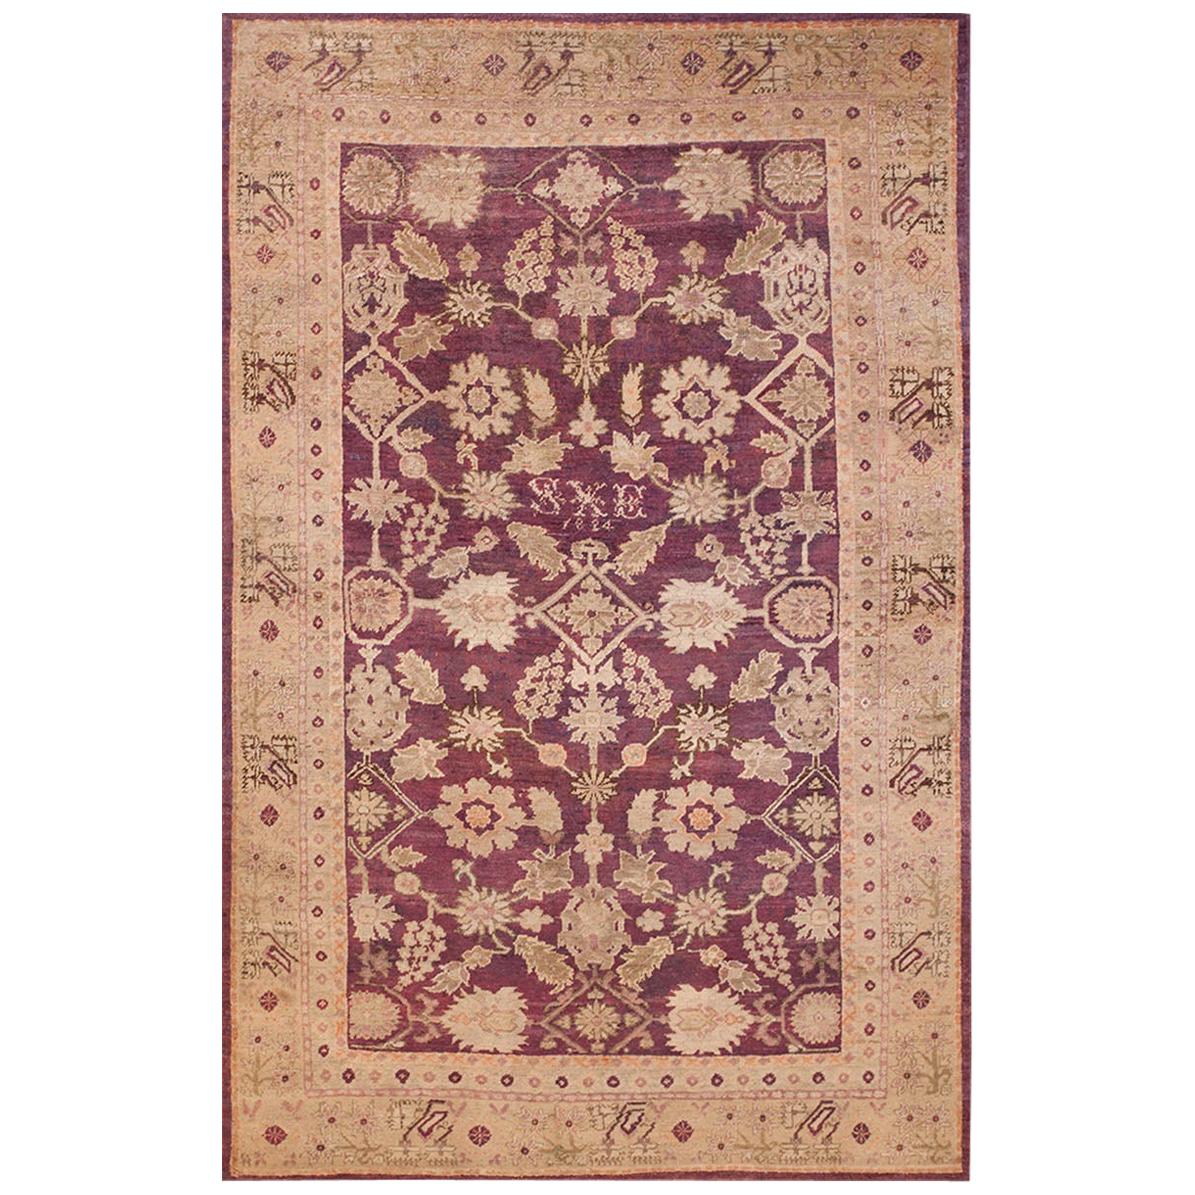 19th Century Turkish Oushak Ghiordes Carpet ( 6' x 9'5" - 183 x 267 )